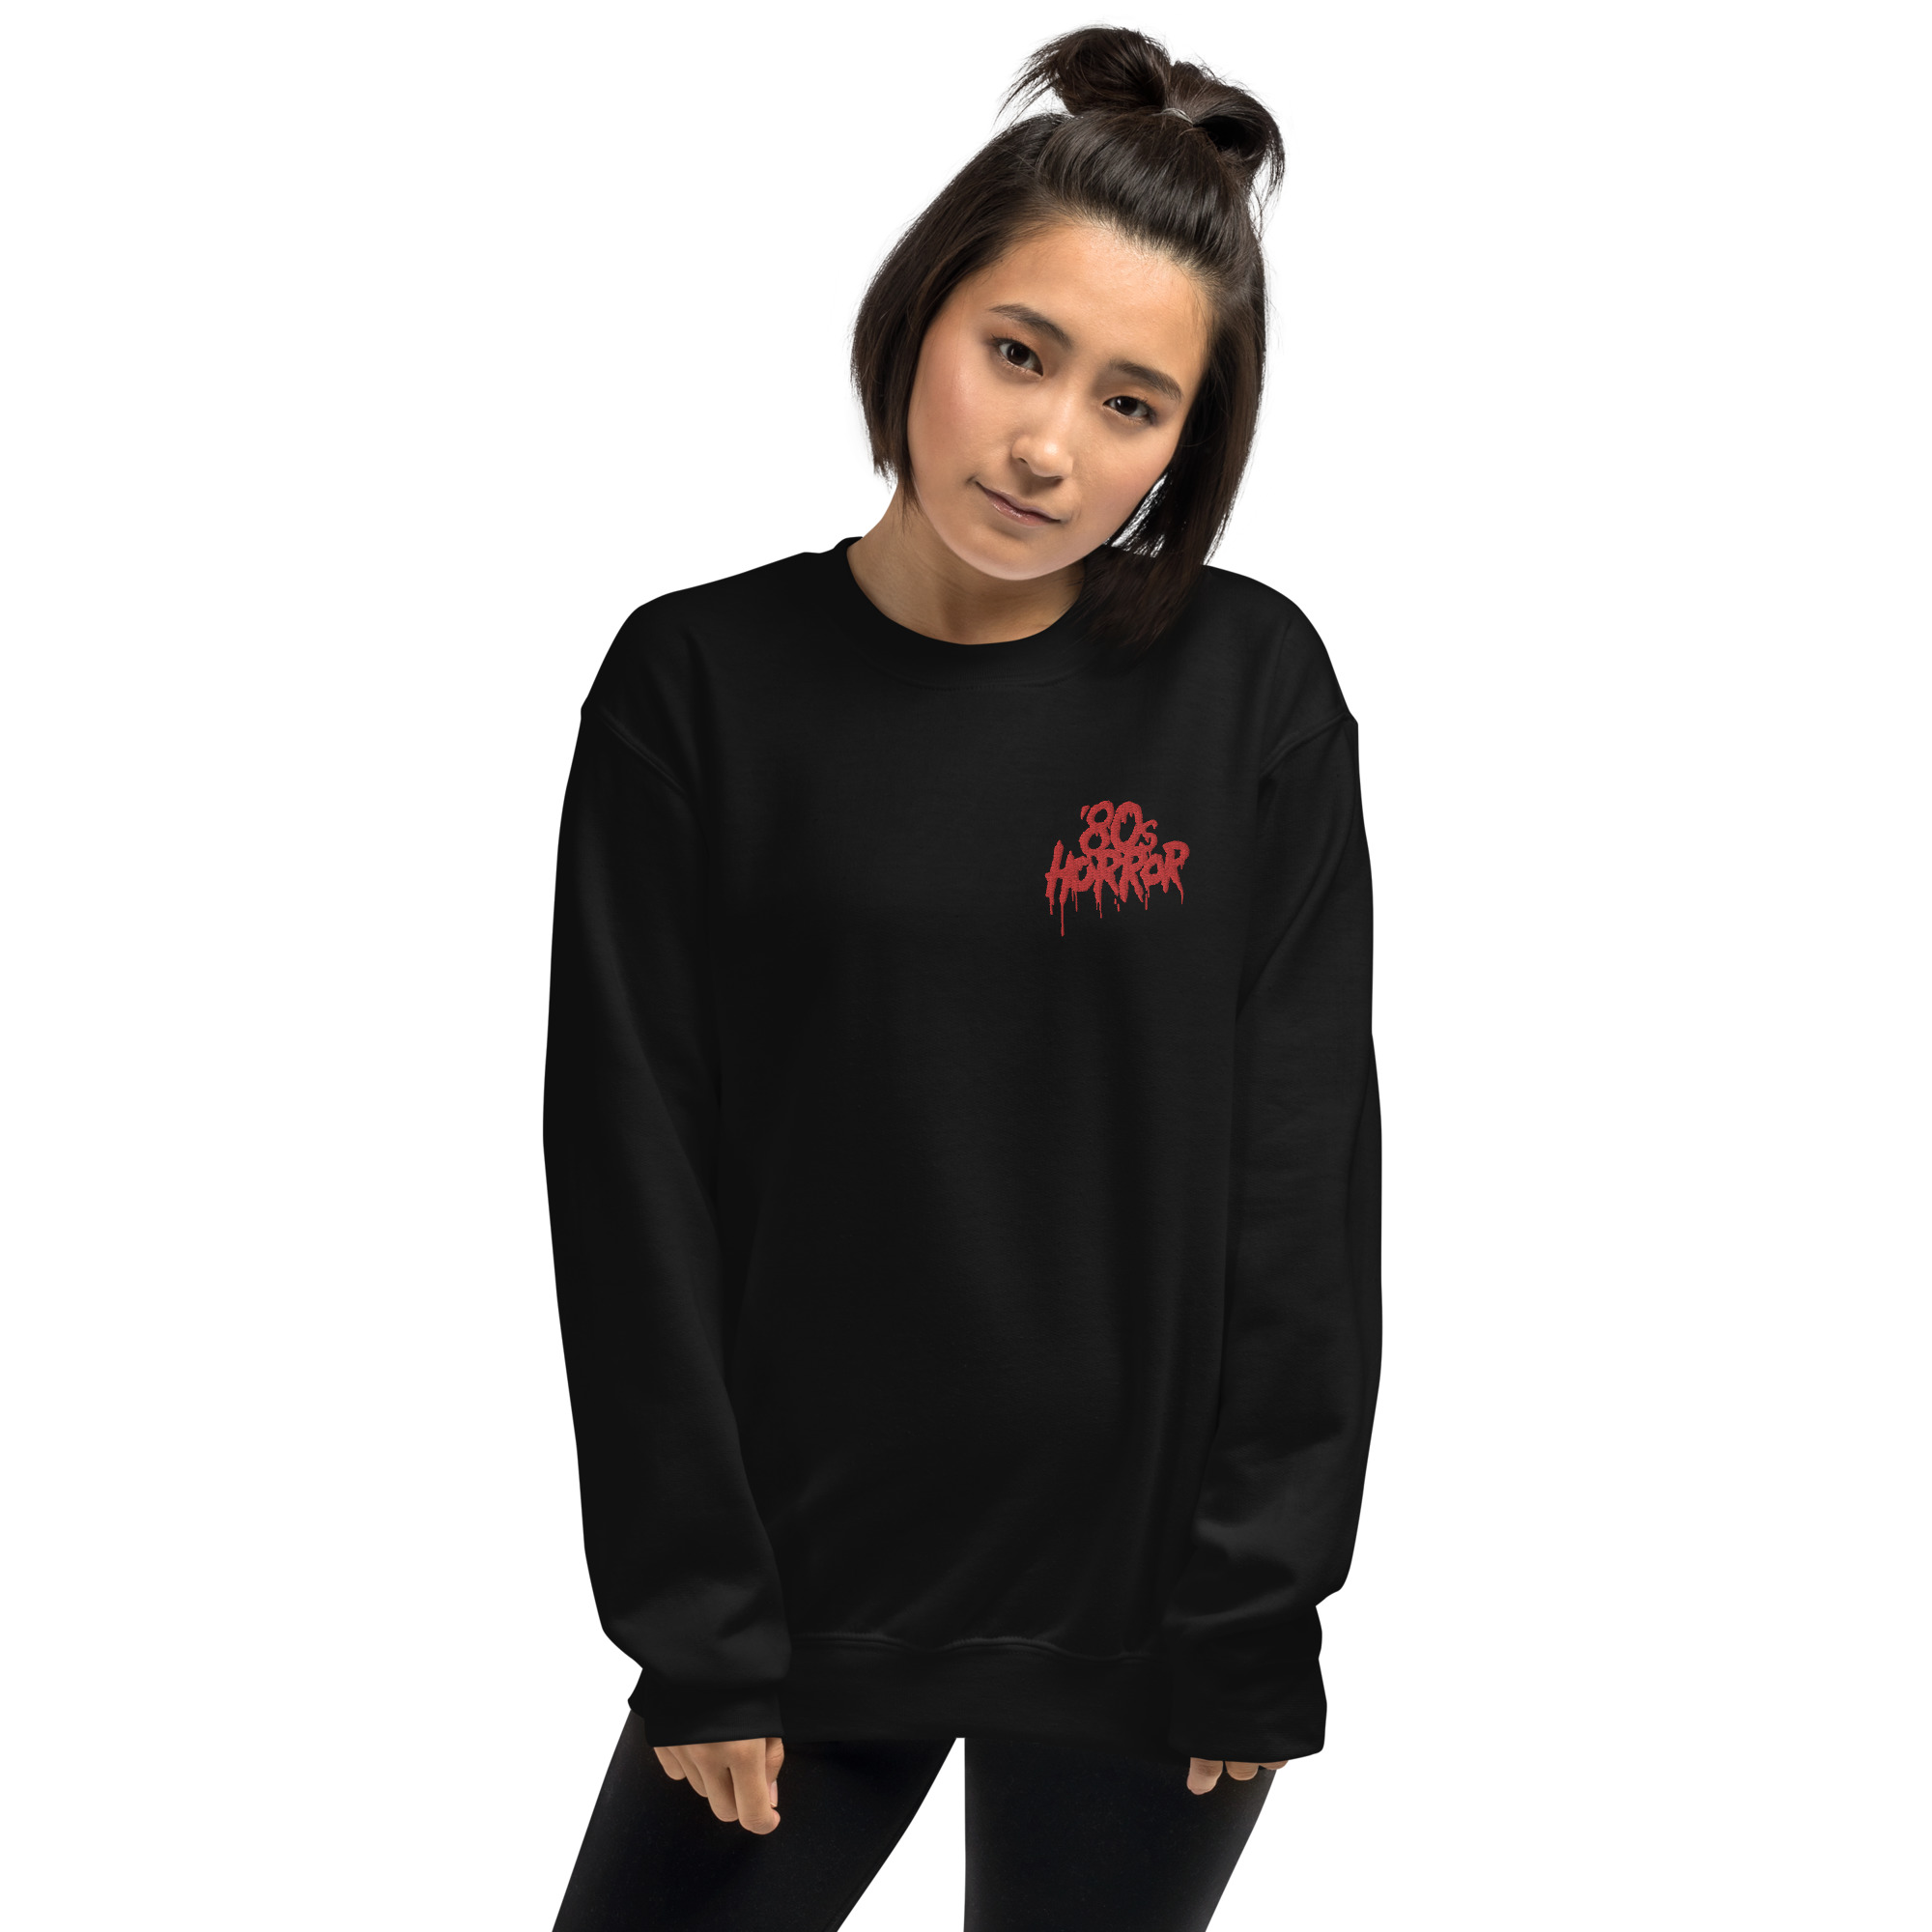 80s Horror Embroidered Sweatshirt | Premium Quality & Versatile Style